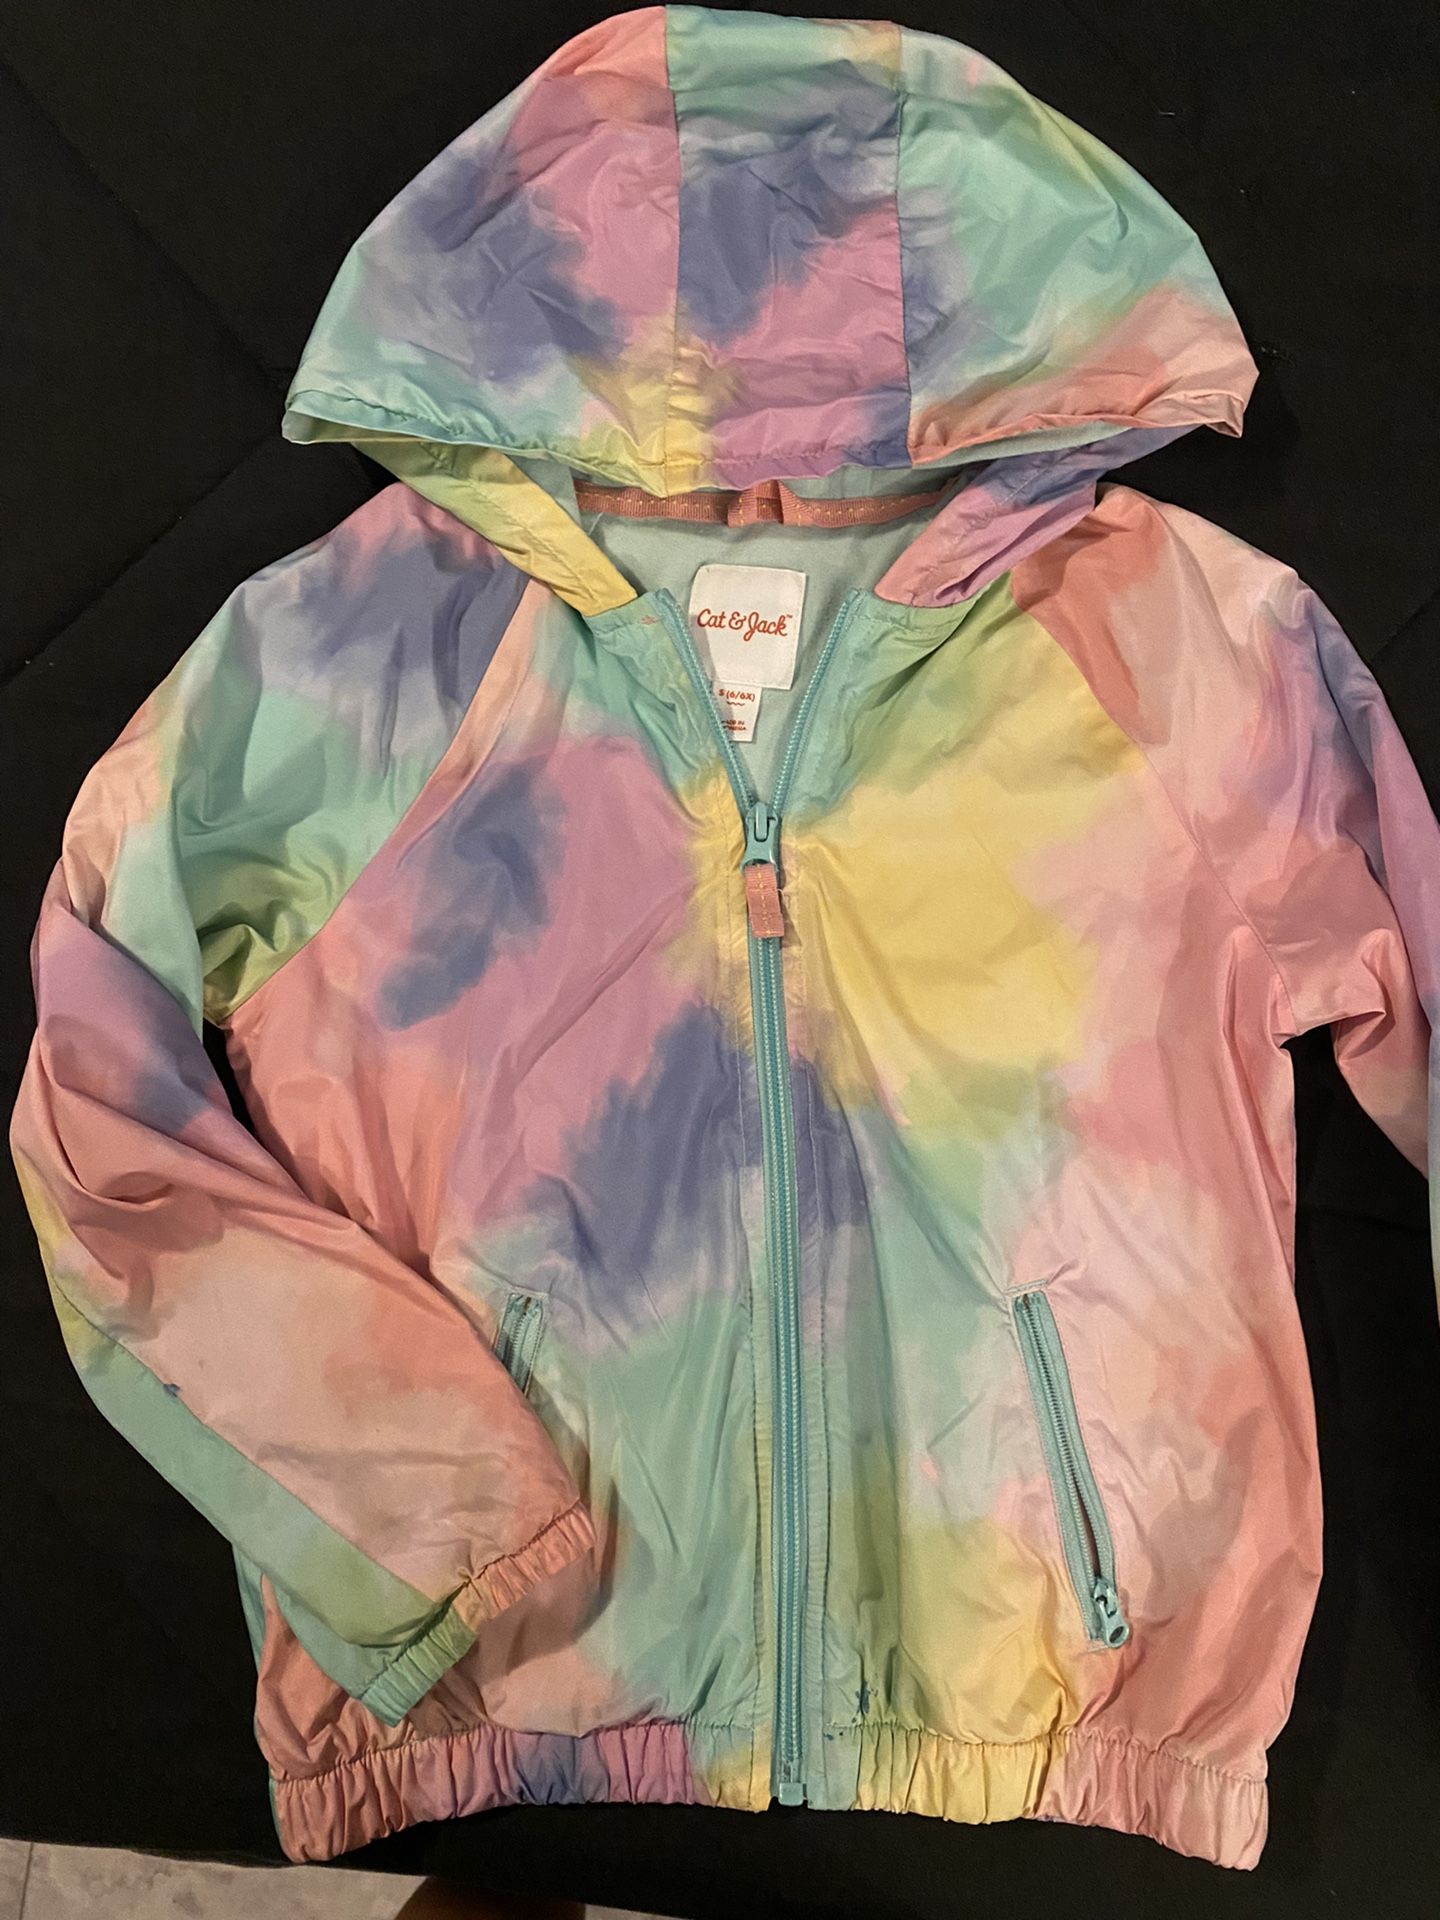 Girls Tye Dye Jacket - Size 6/6x small